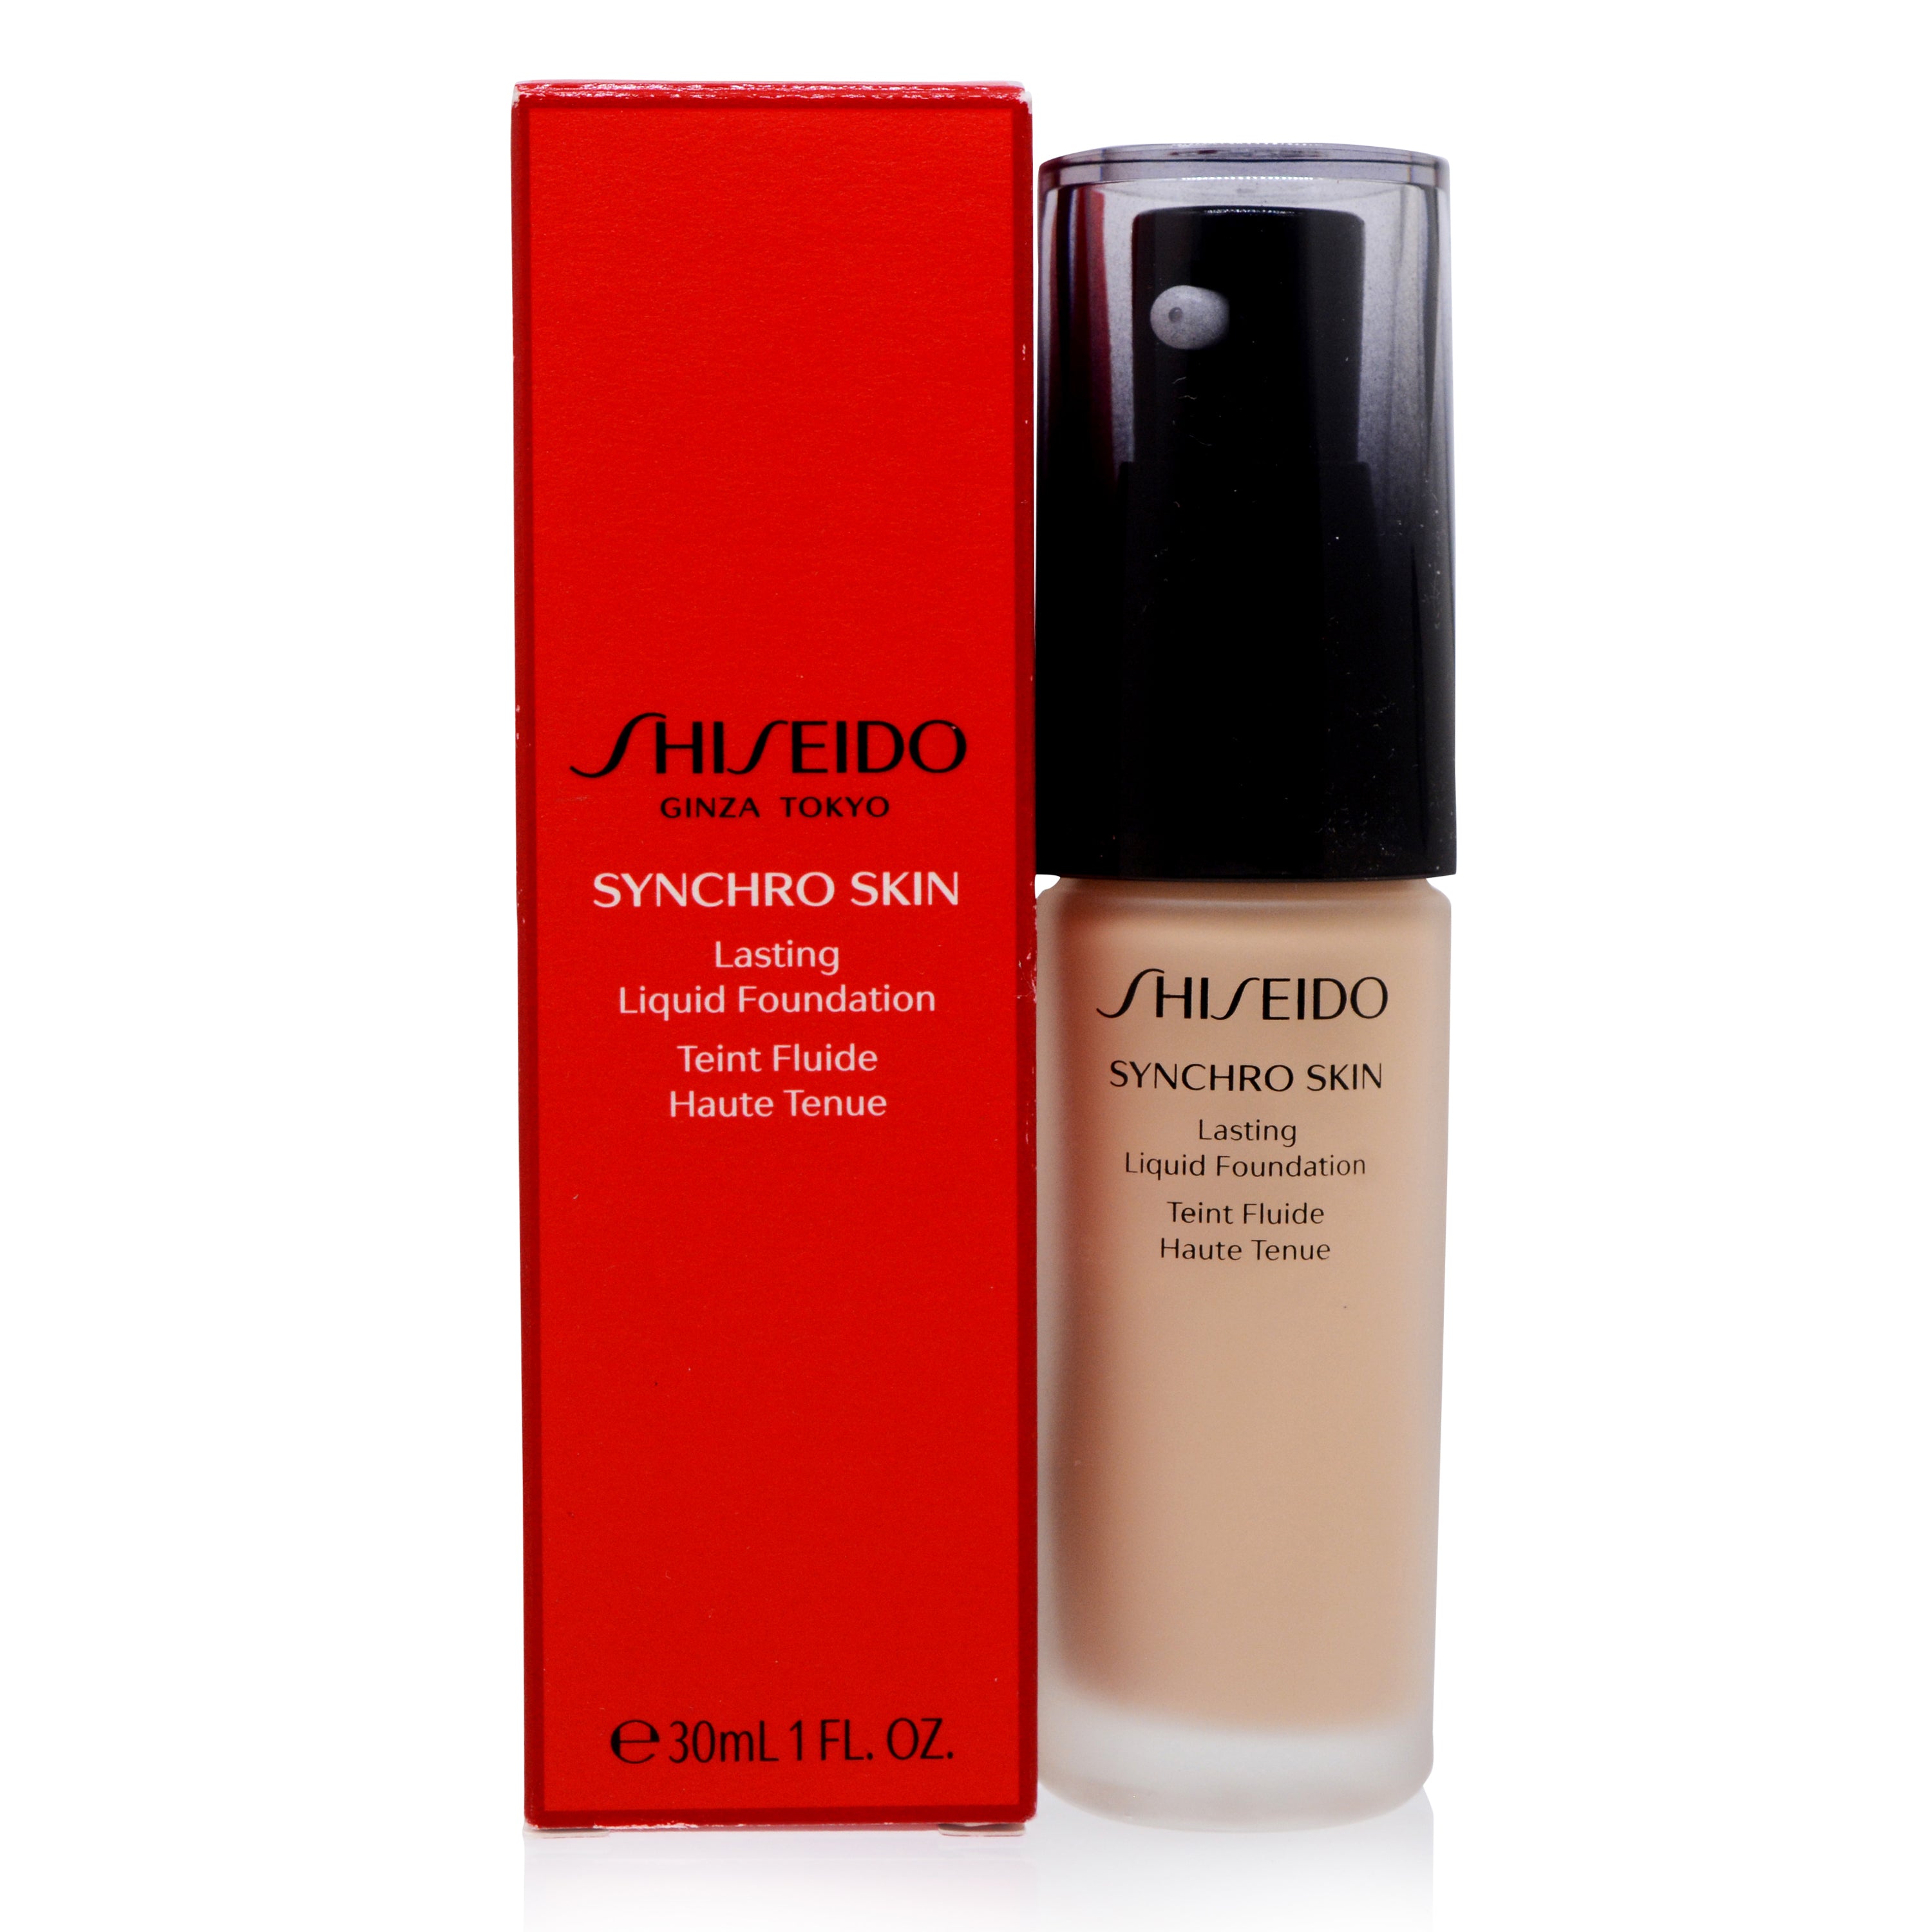 Shiseido Synchro Skin Spf 20 Lasting Liquid Foundation